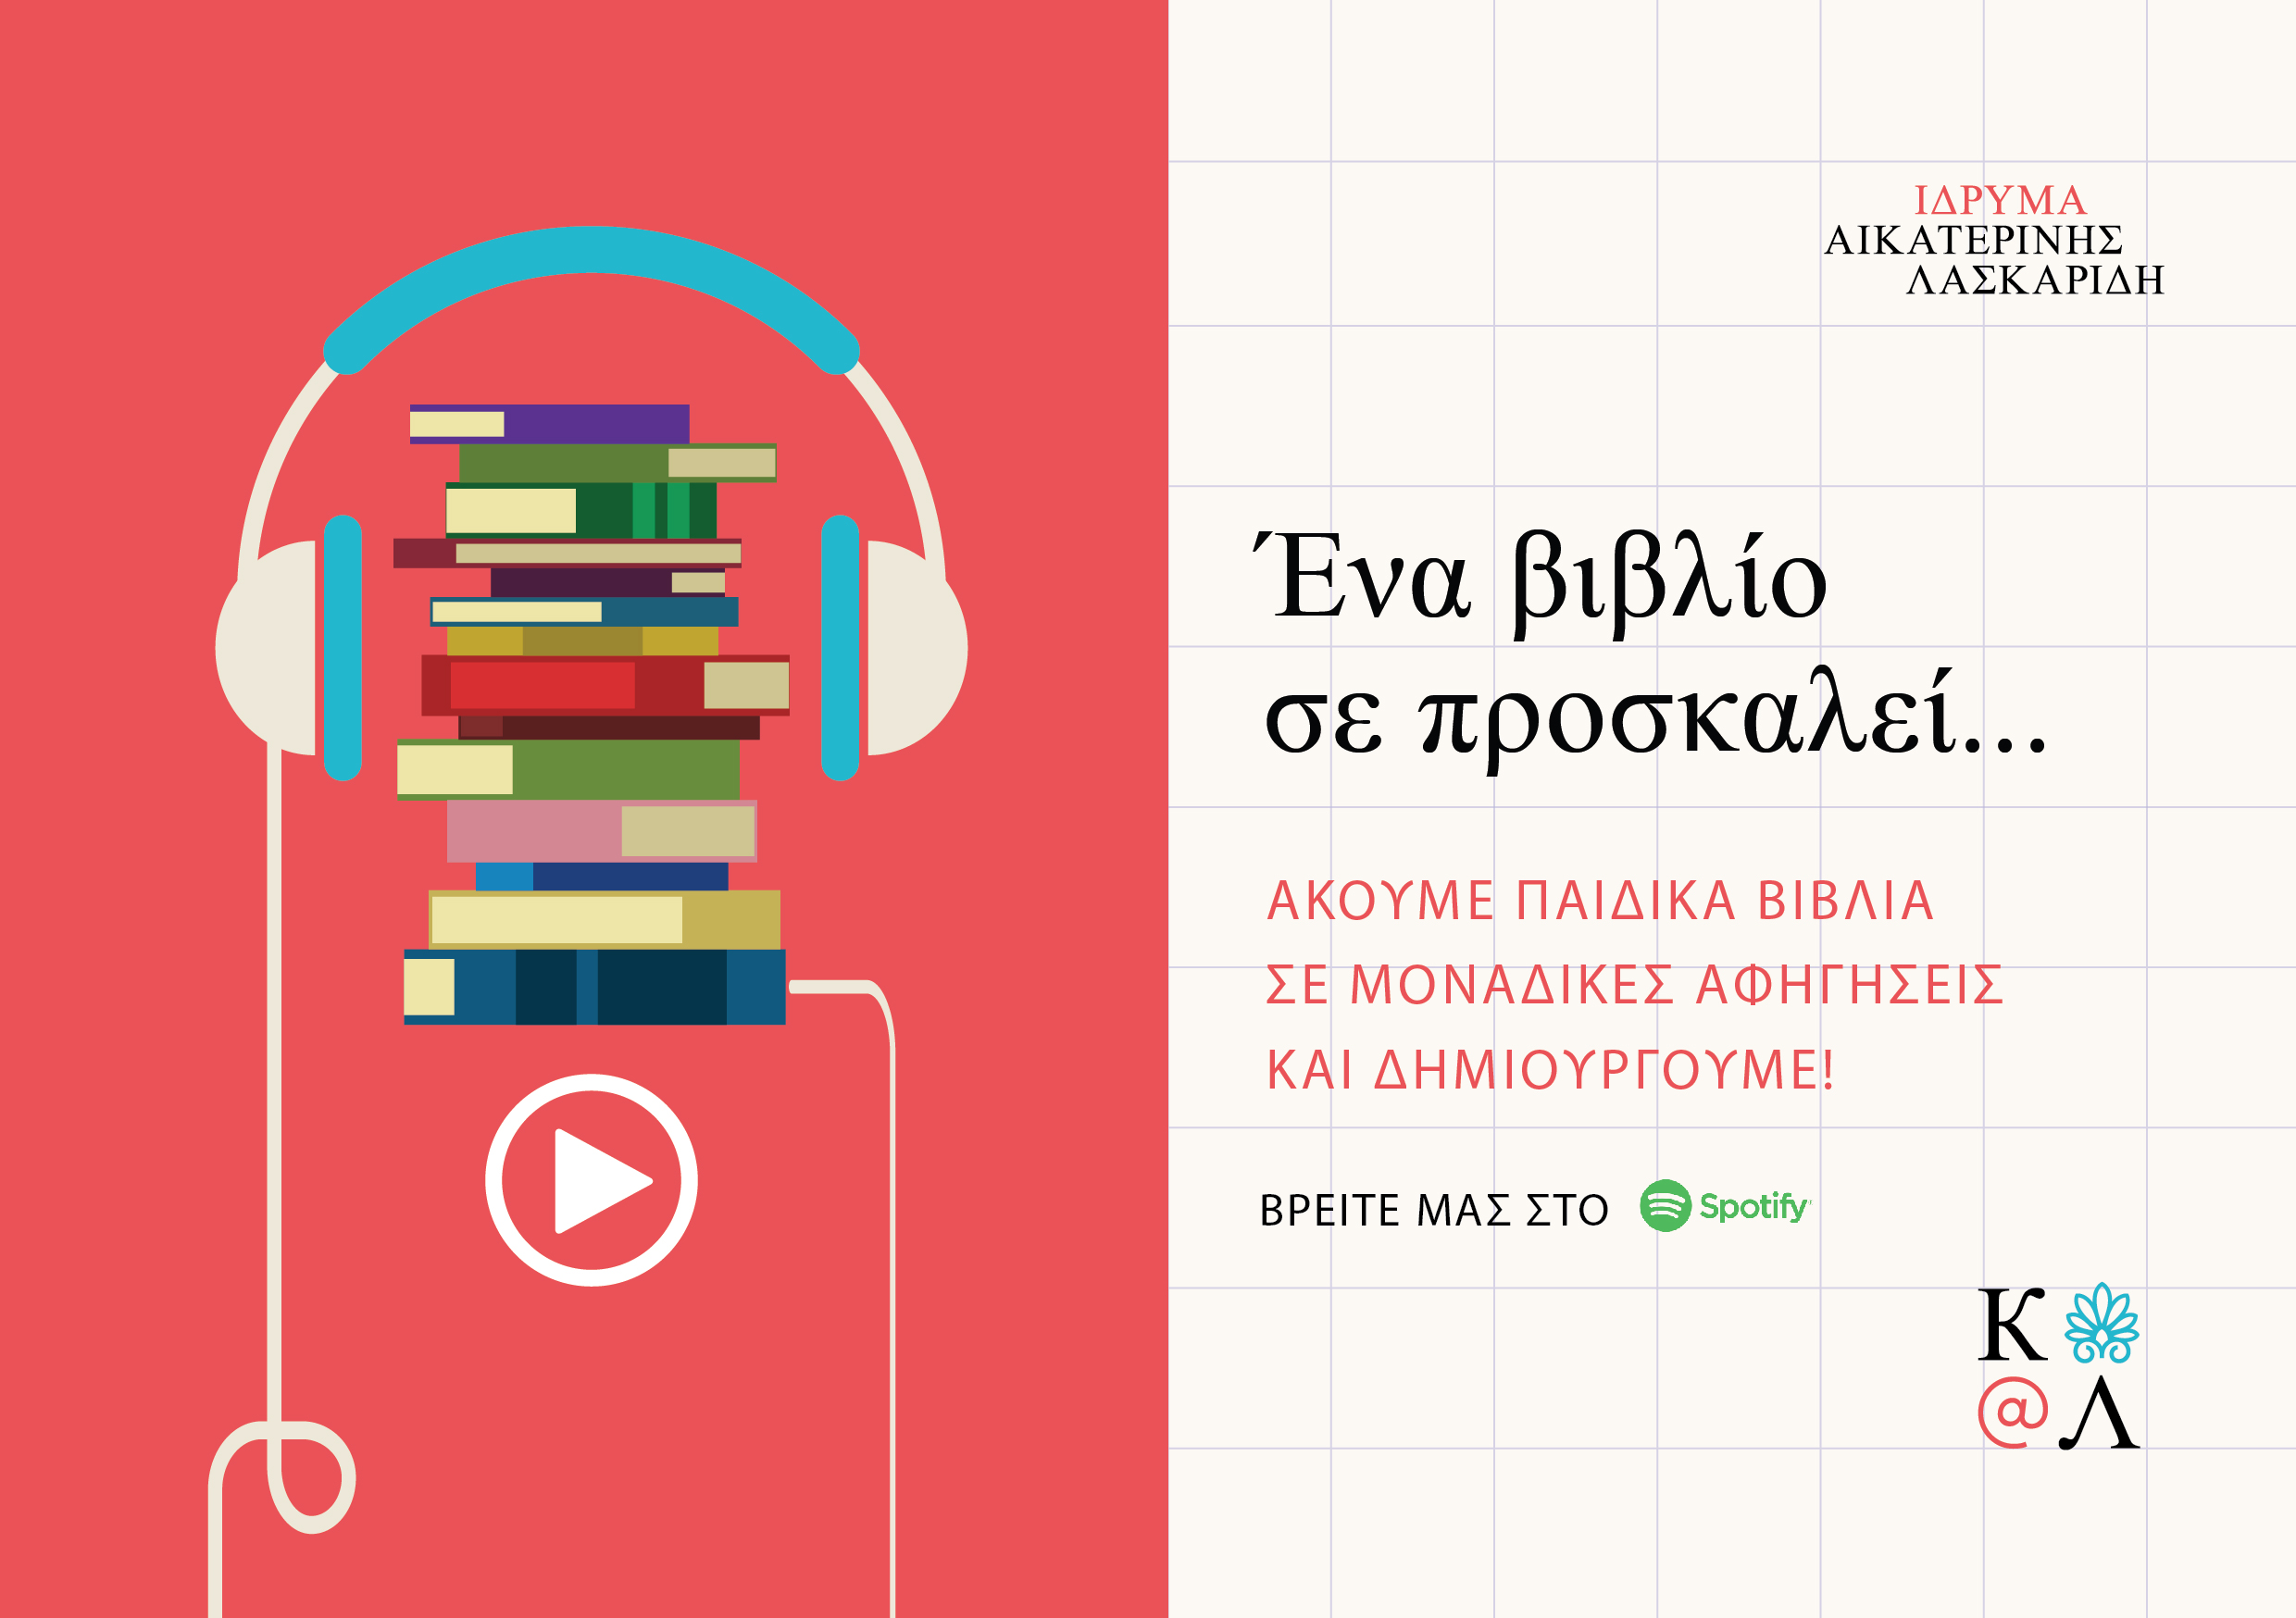 Aikaterini Laskaridis Foundation-Σειρά podcasts με παιδικά βιβλία